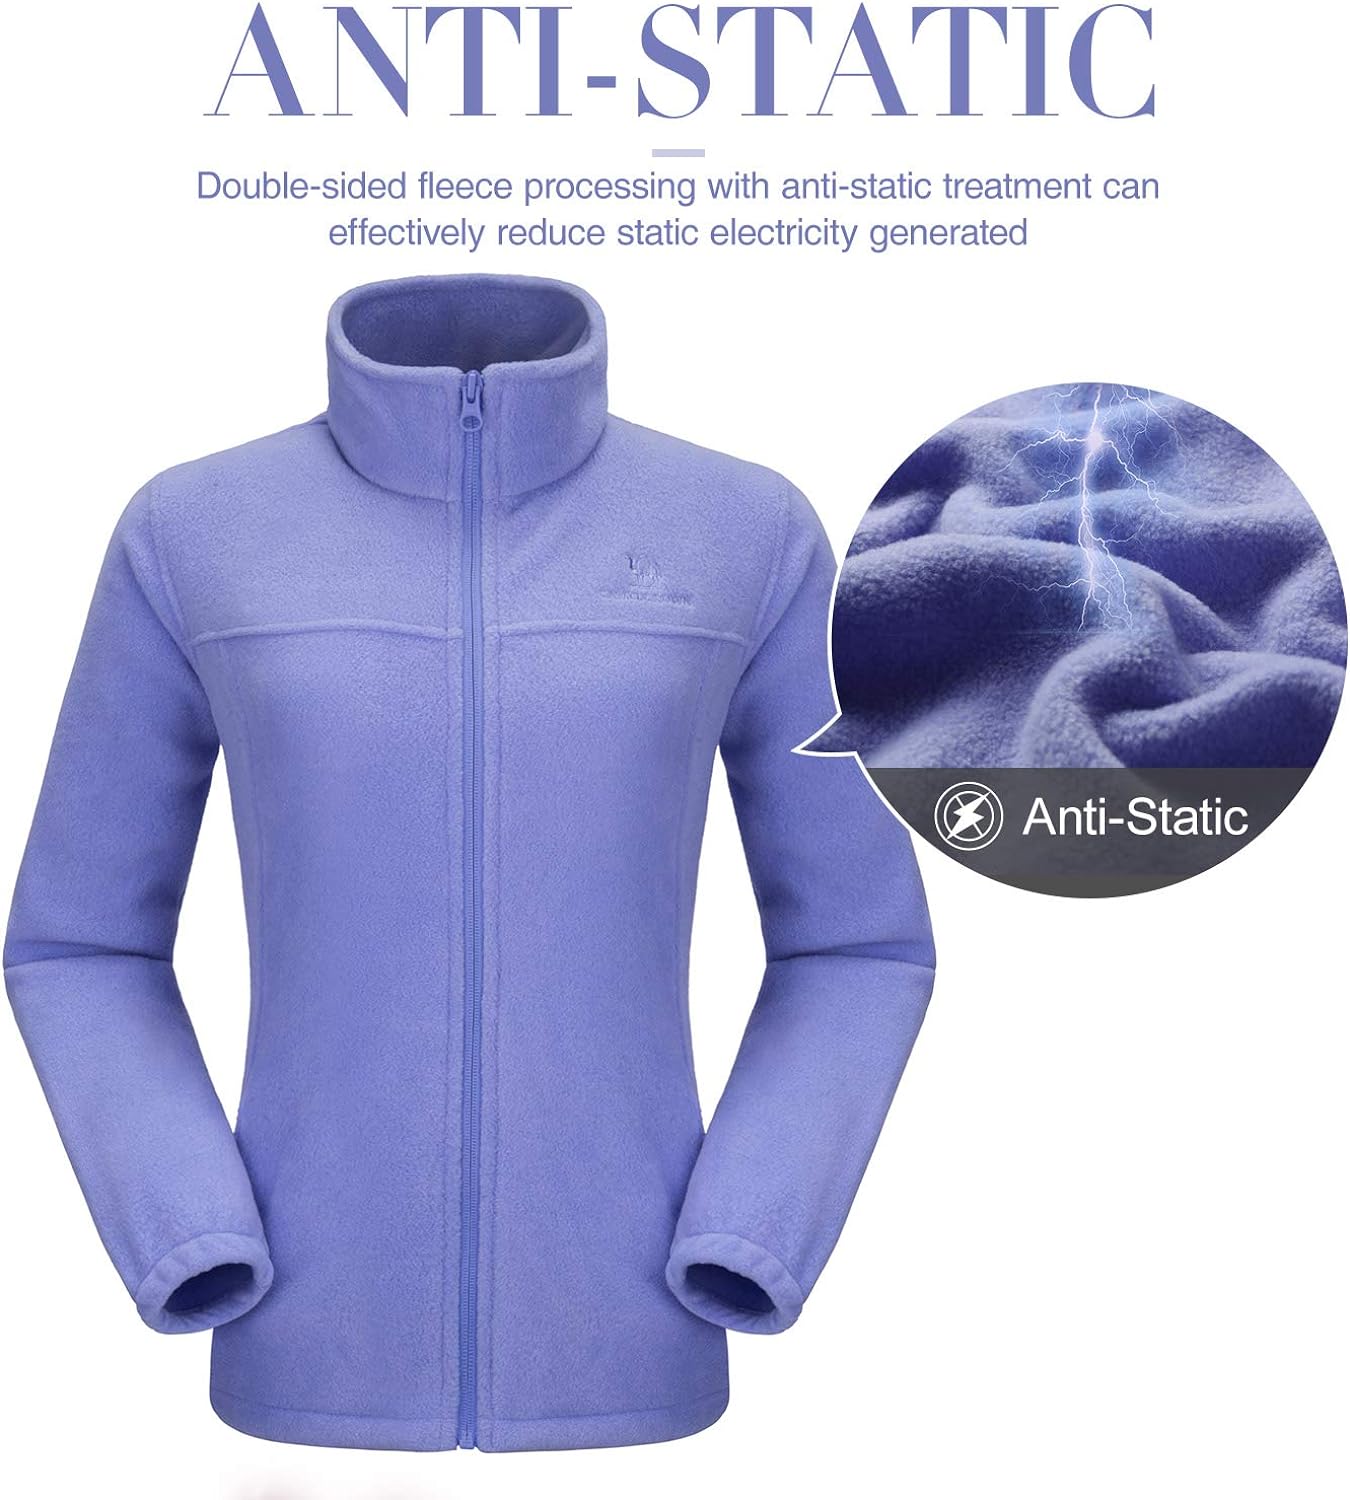 Wholesale Women's Full Zip Thermal Jackets With Pockets Soft Polar Fleece Coat - Blue